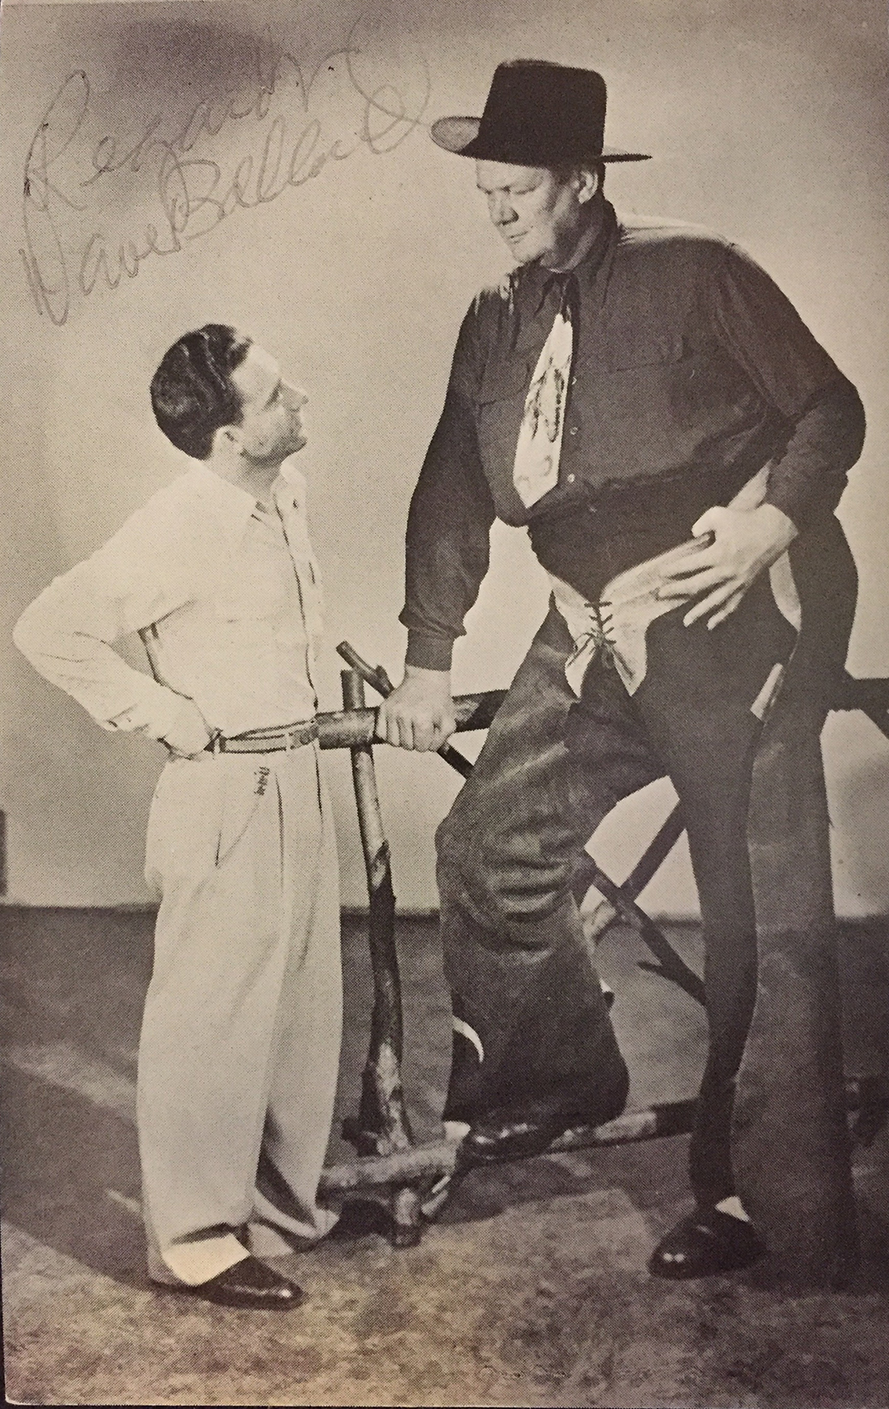 Dave Ballard, the Texas Giant. Photo from the Marc Hartzman Collection.